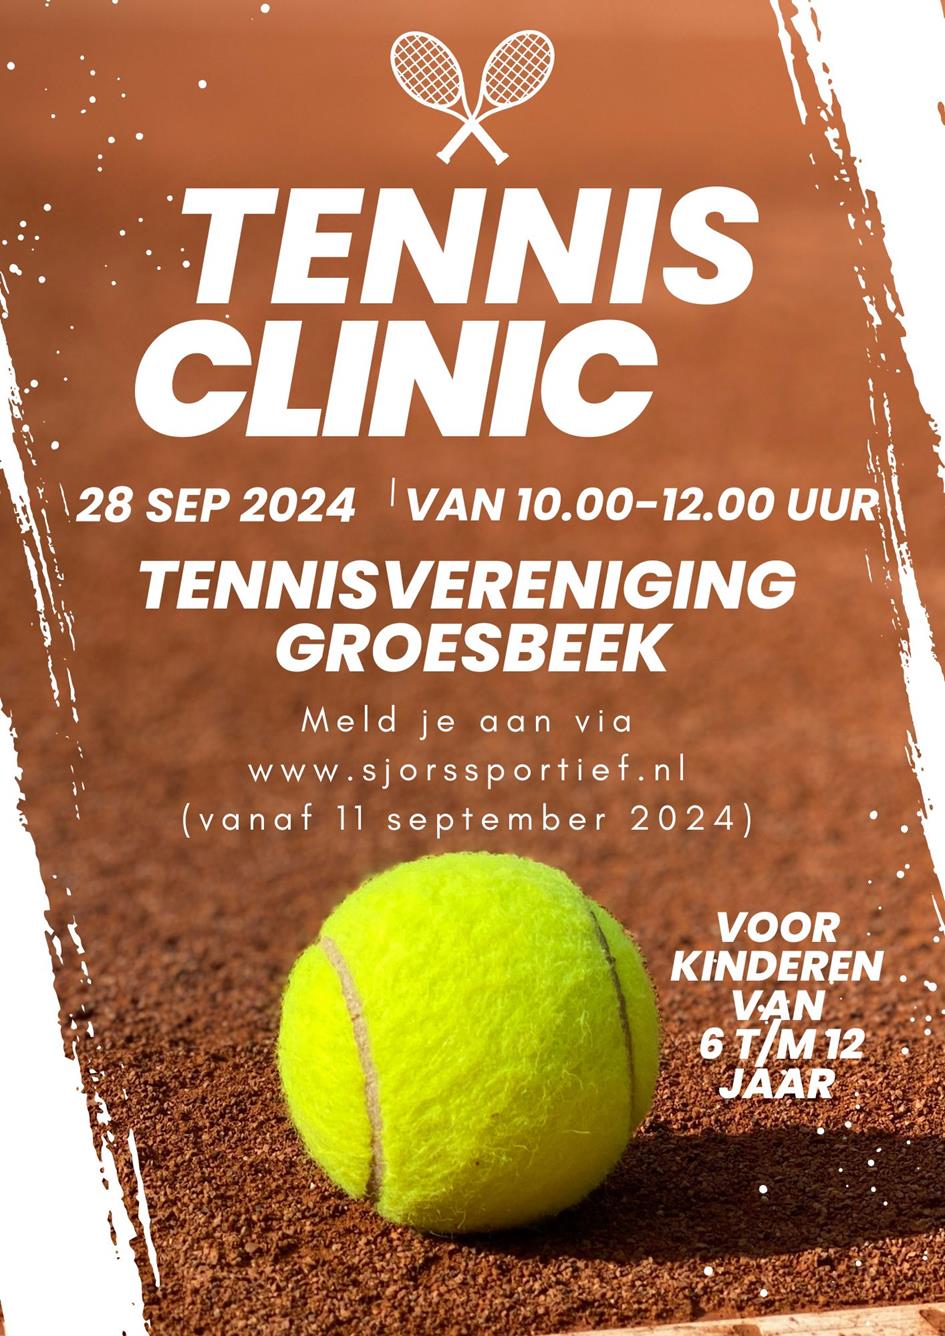 Tennis clinic Sjors S 28 sep Flyer.jpg